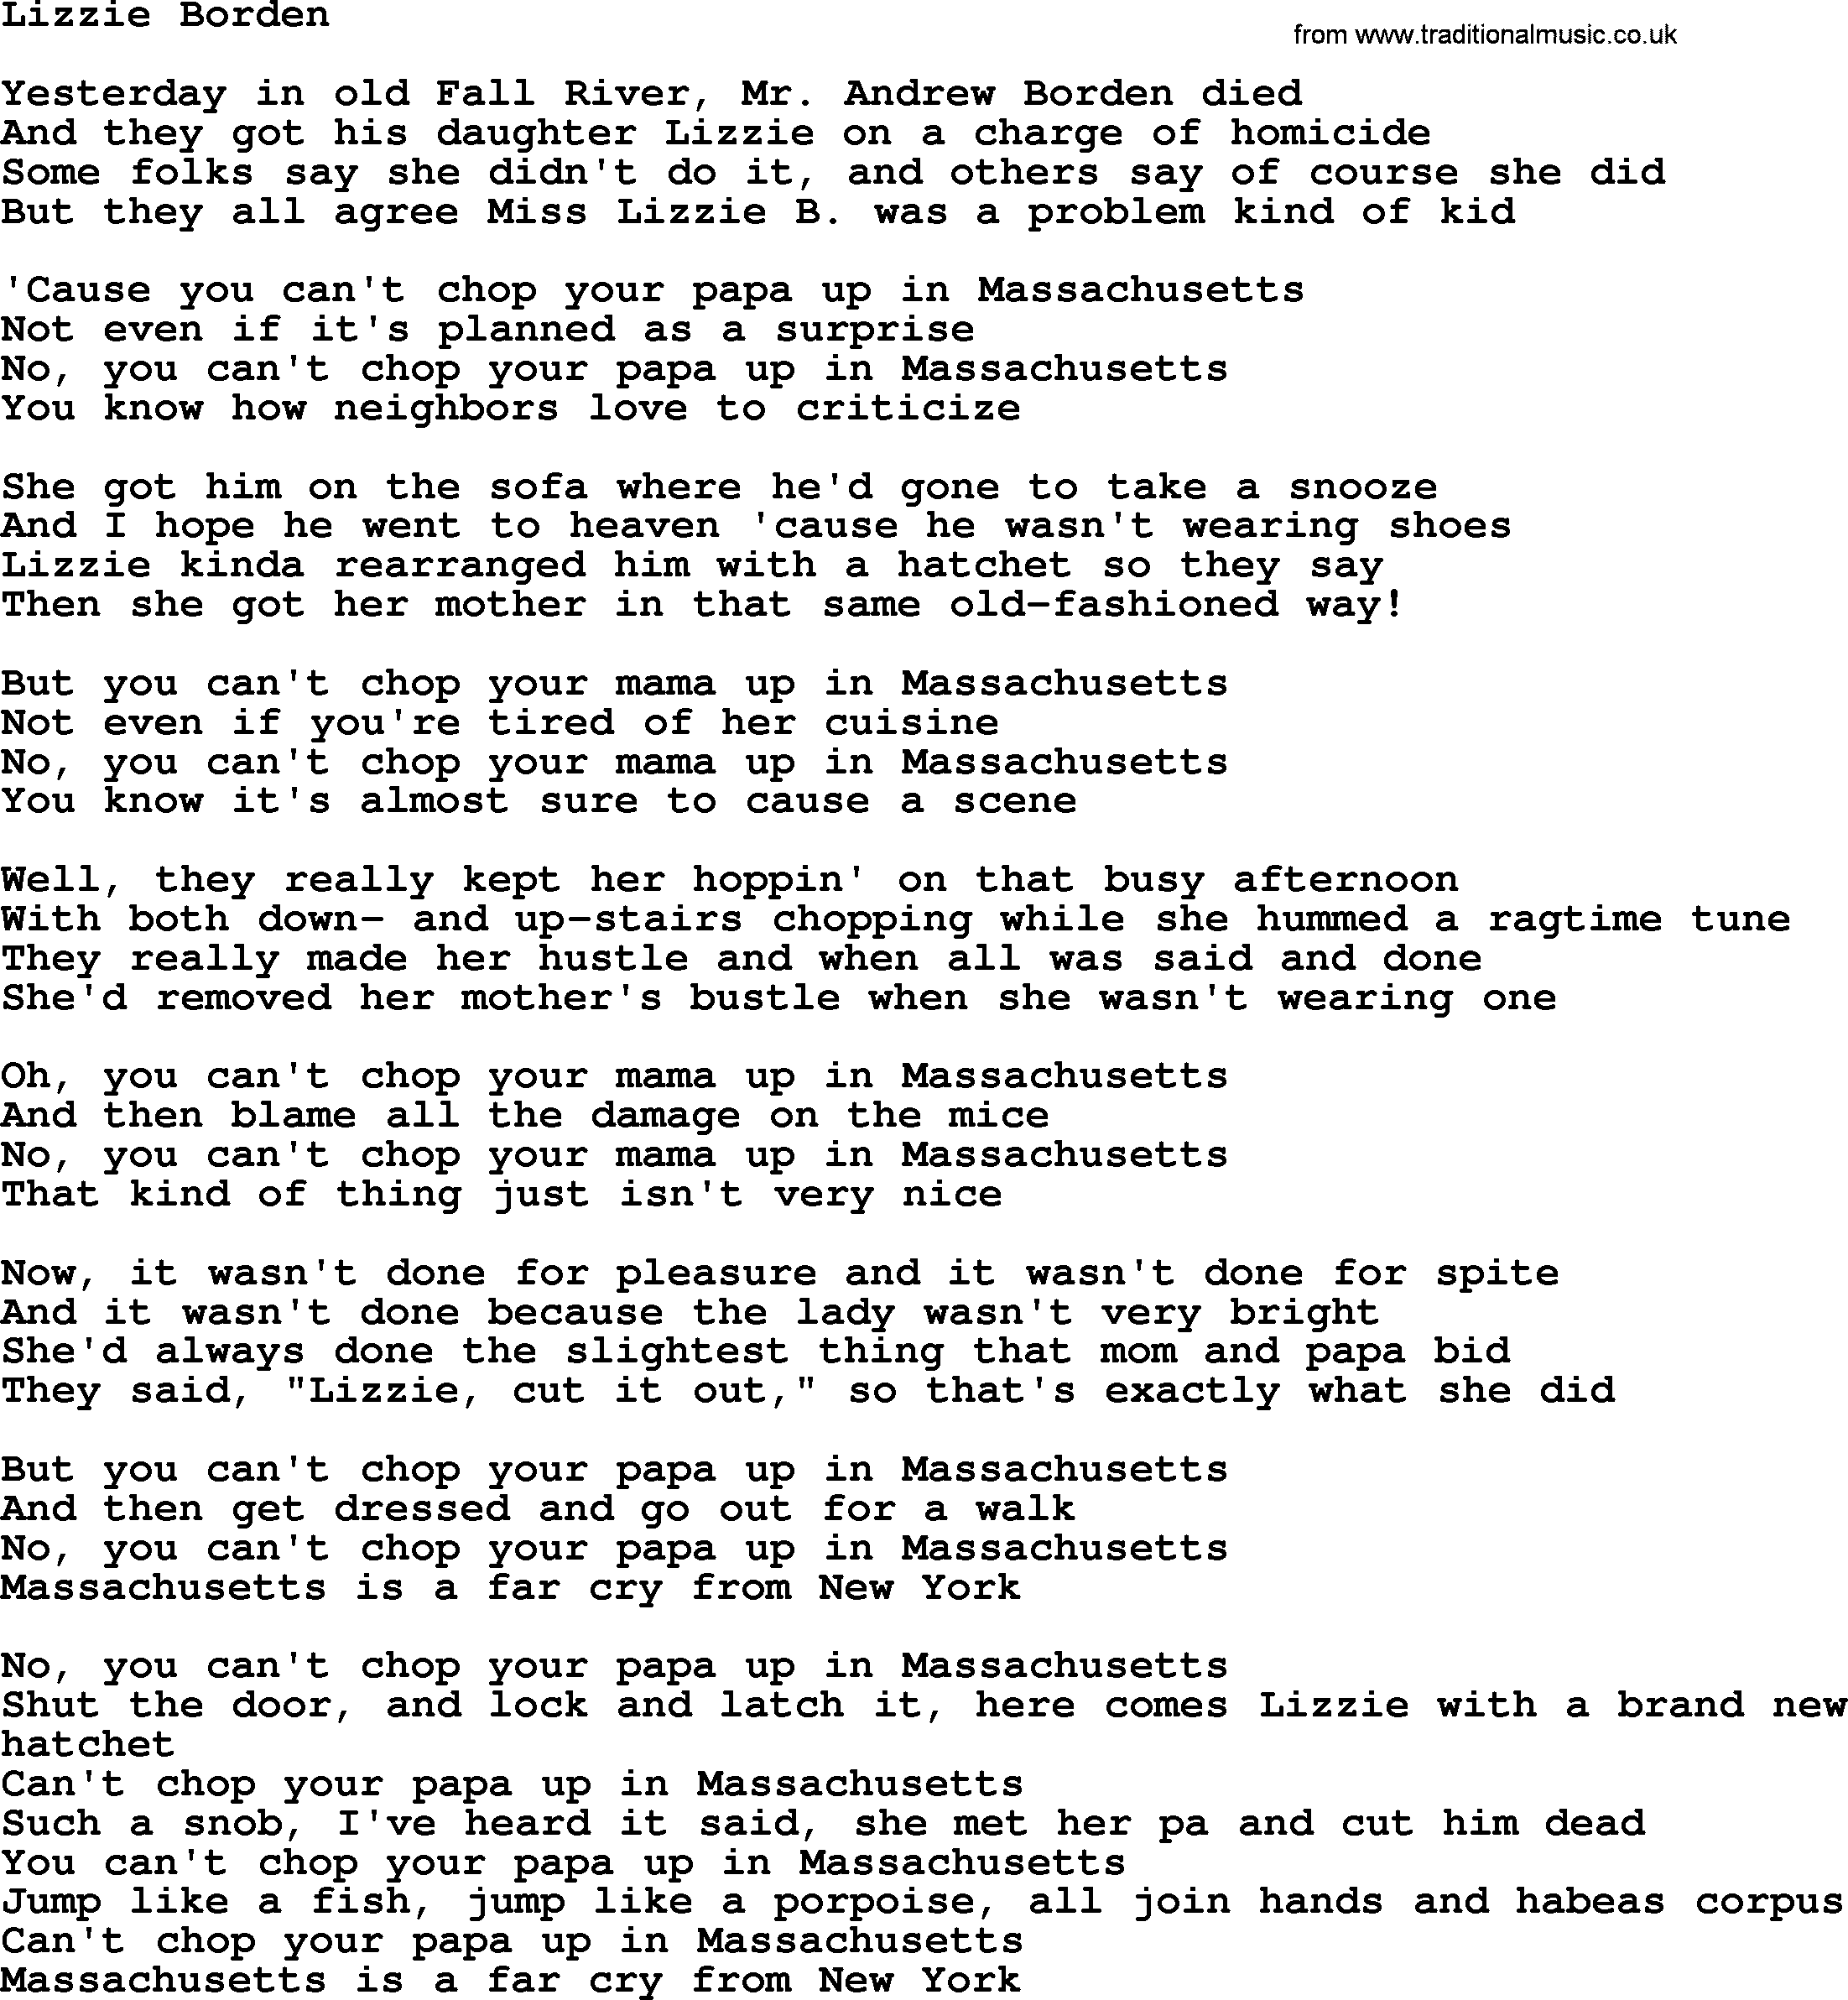 The Byrds song Lizzie Borden, lyrics